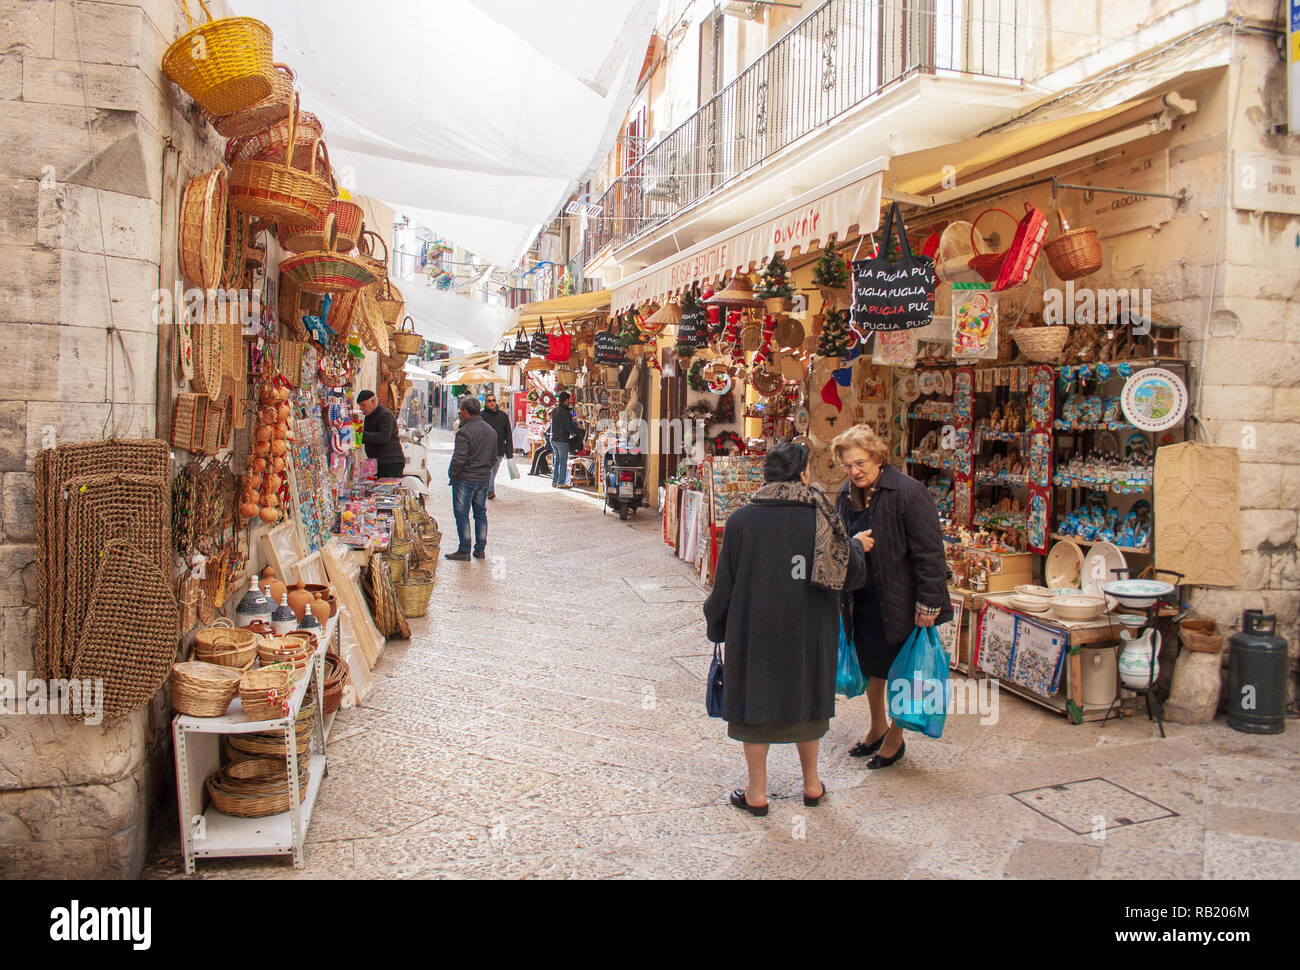 View of a narrow street in  Bari, Puglia, Italy, Bari vecchia, traditional open market shops with souvenir for tourists Stock Photo